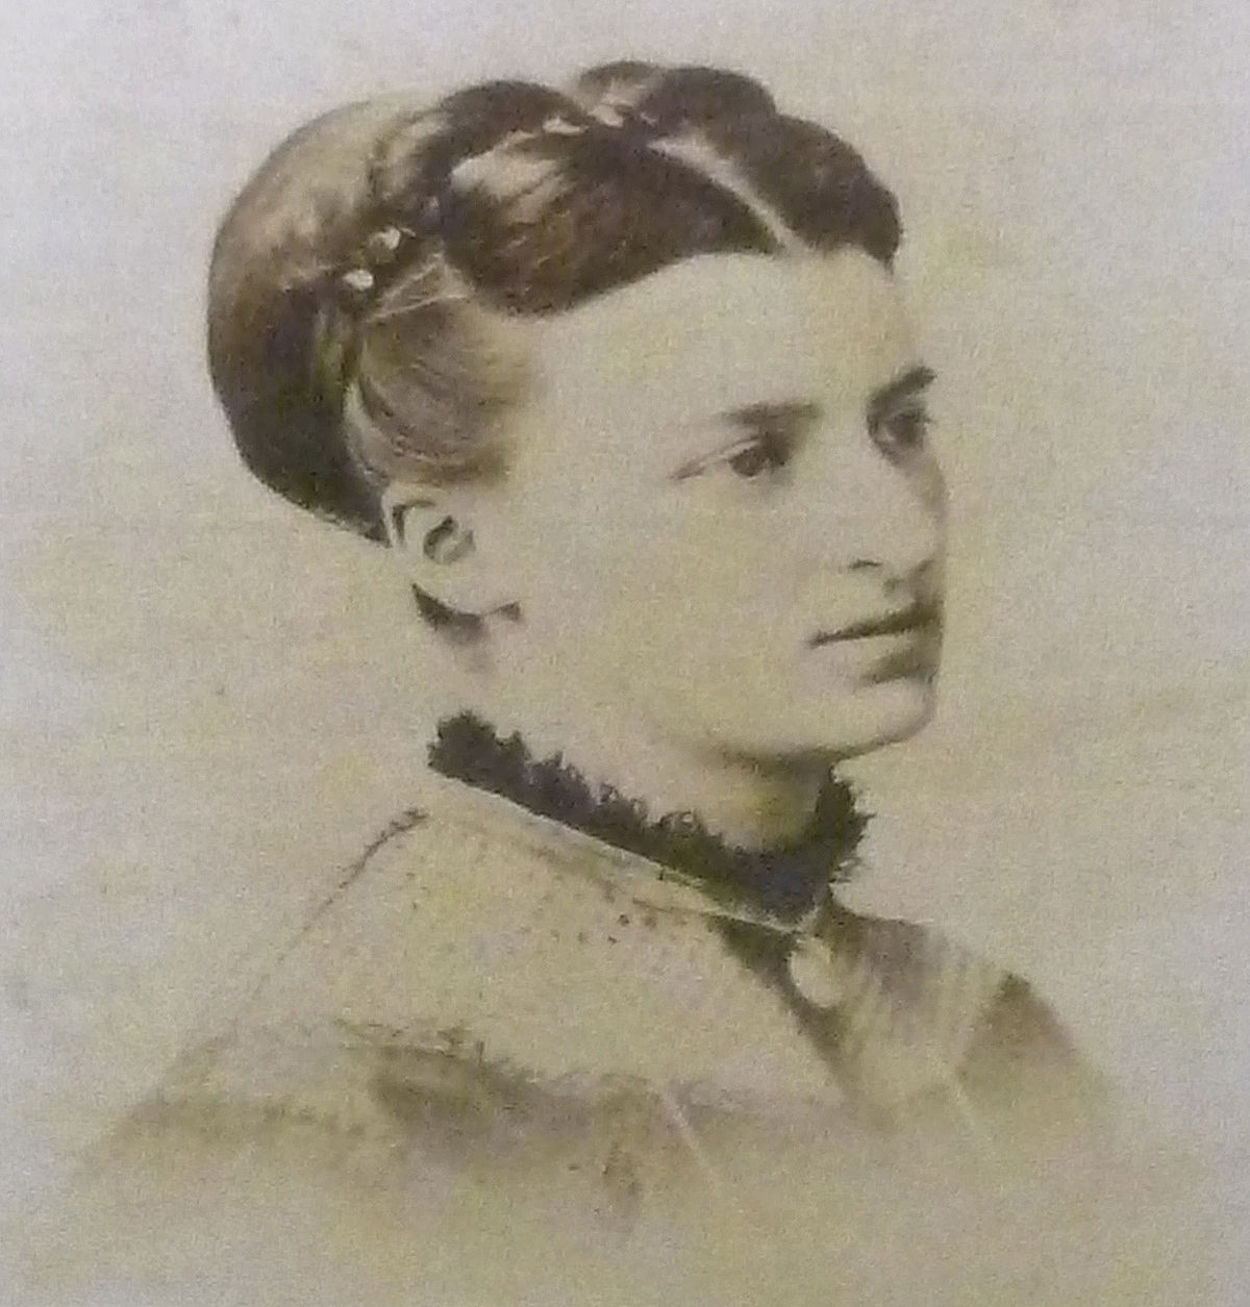 Anna Boch - 10 February 1848 - 25 February 1936